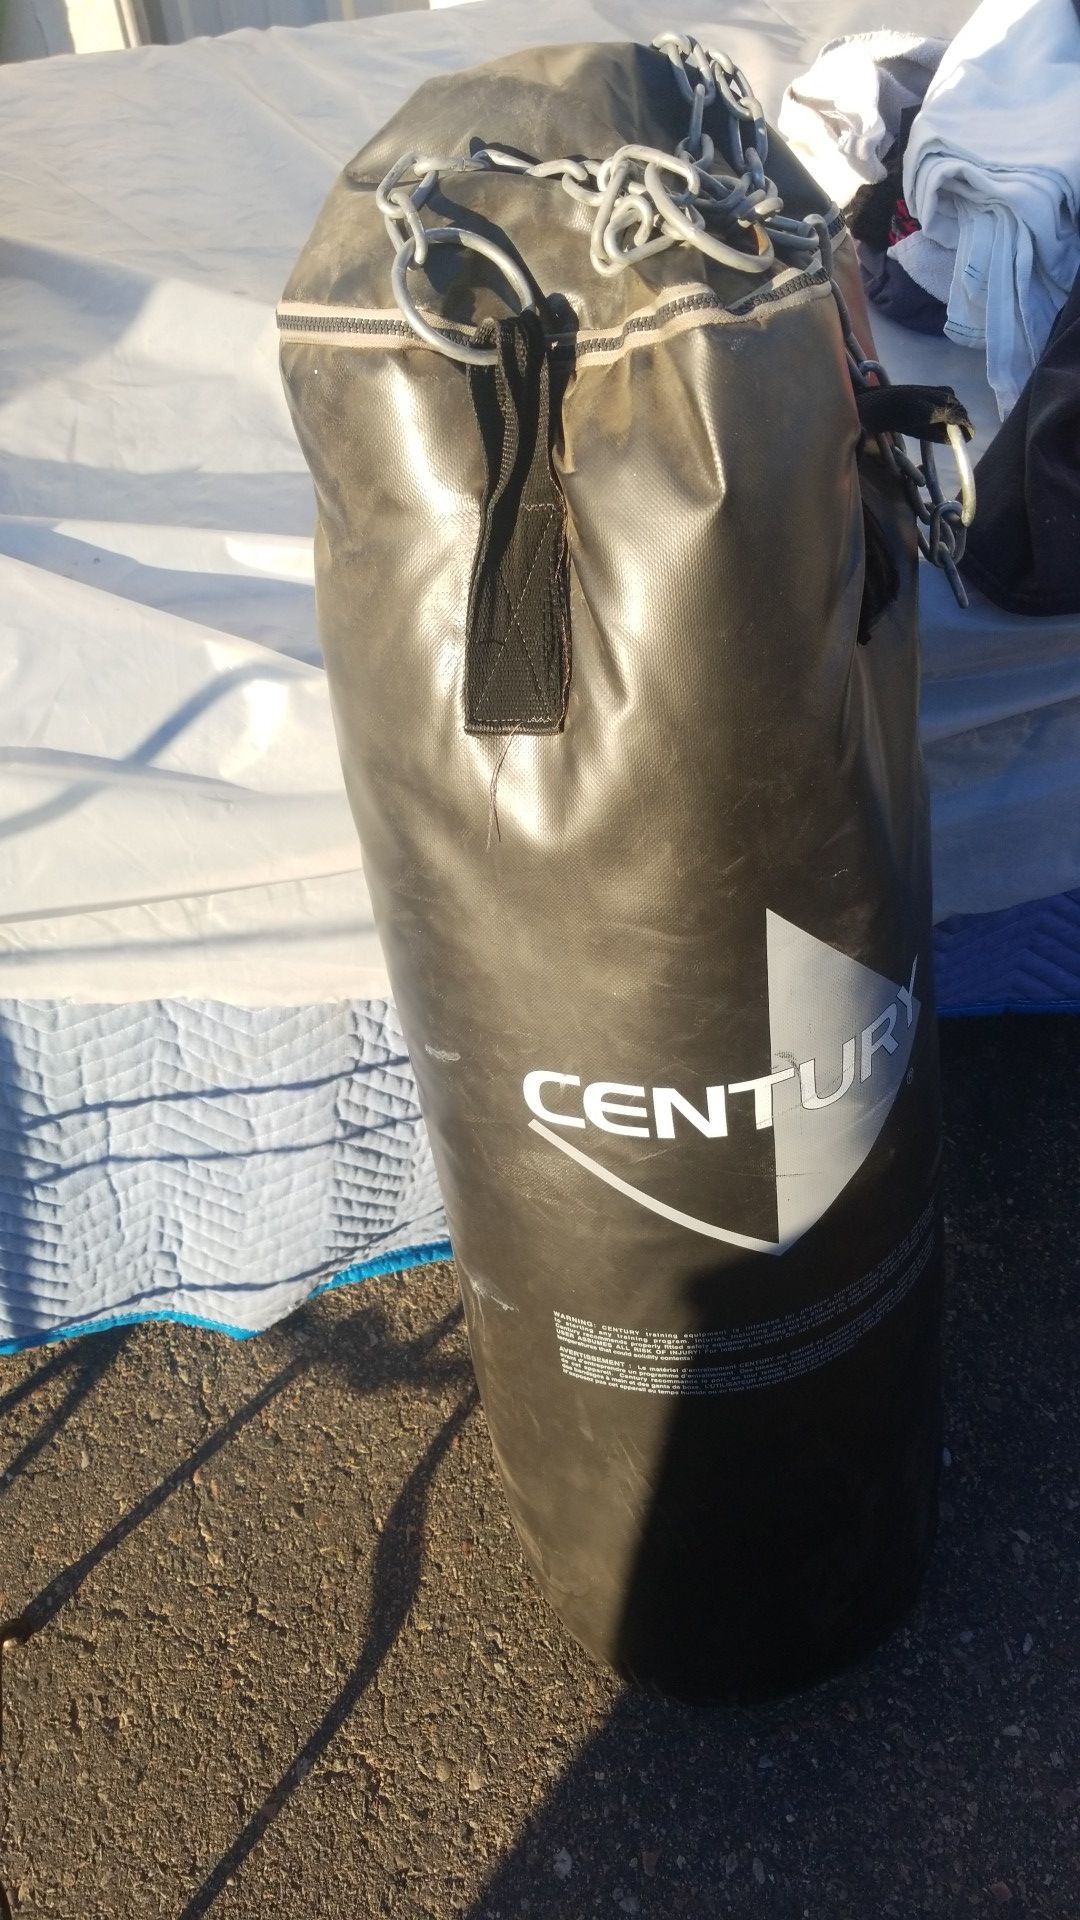 Century 70lb heavy punching bag